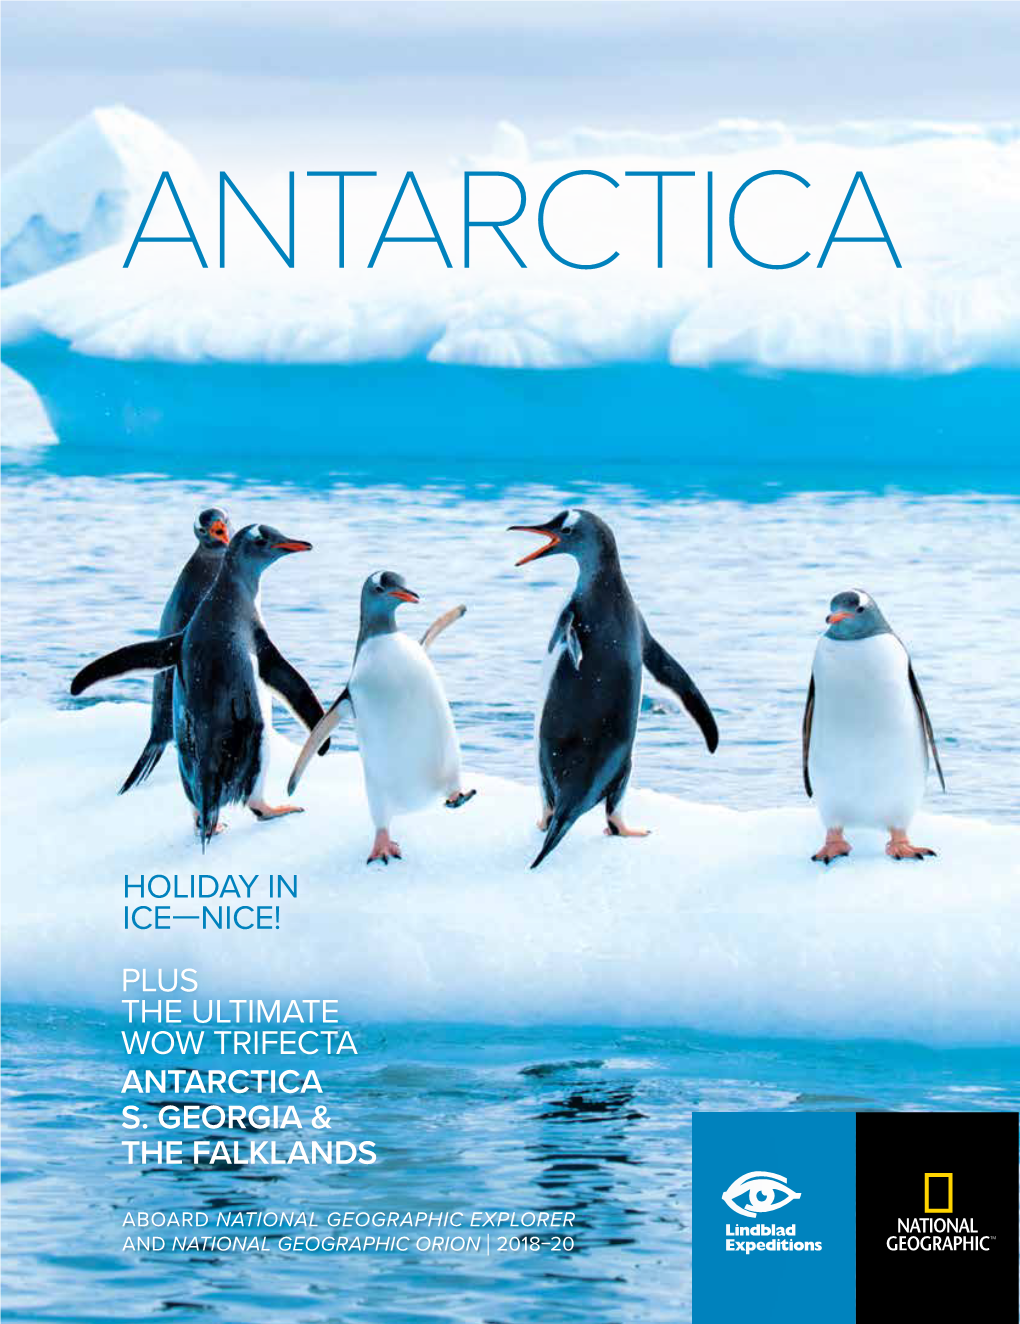 The Ultimate Wow Trifecta Antarctica S. Georgia & The